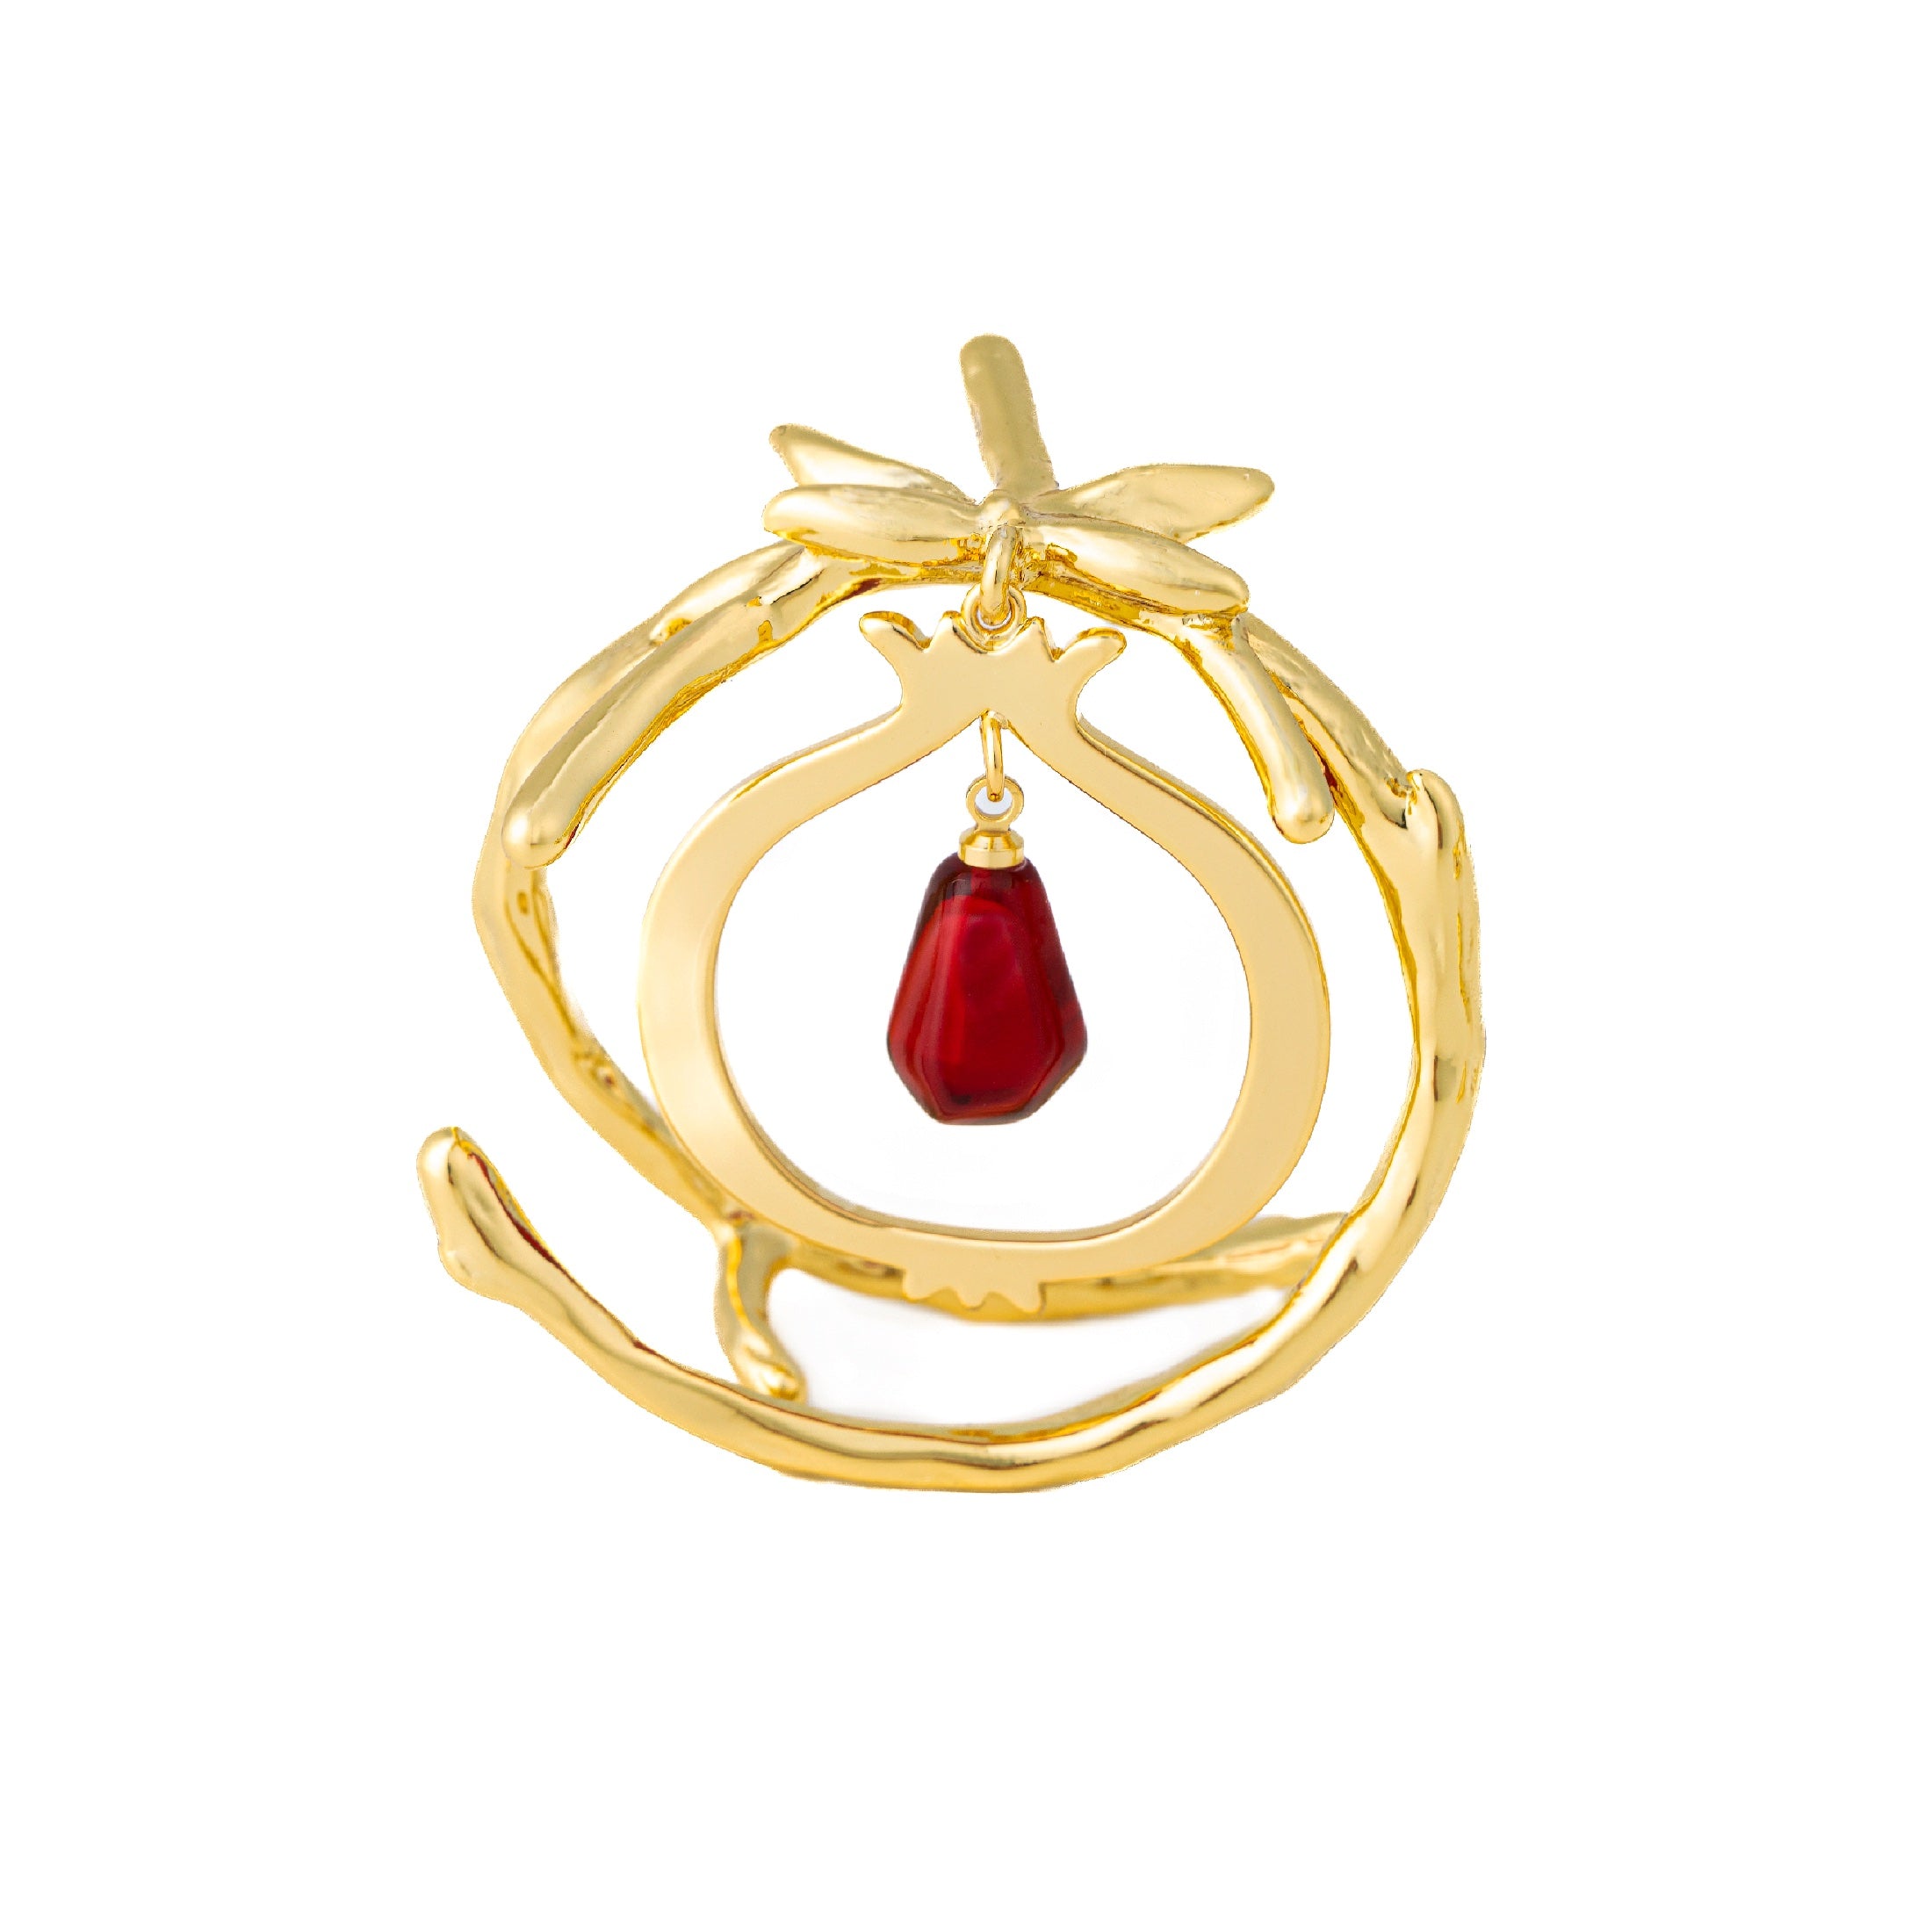 4 Pomegranate Napkin Rings - Gold